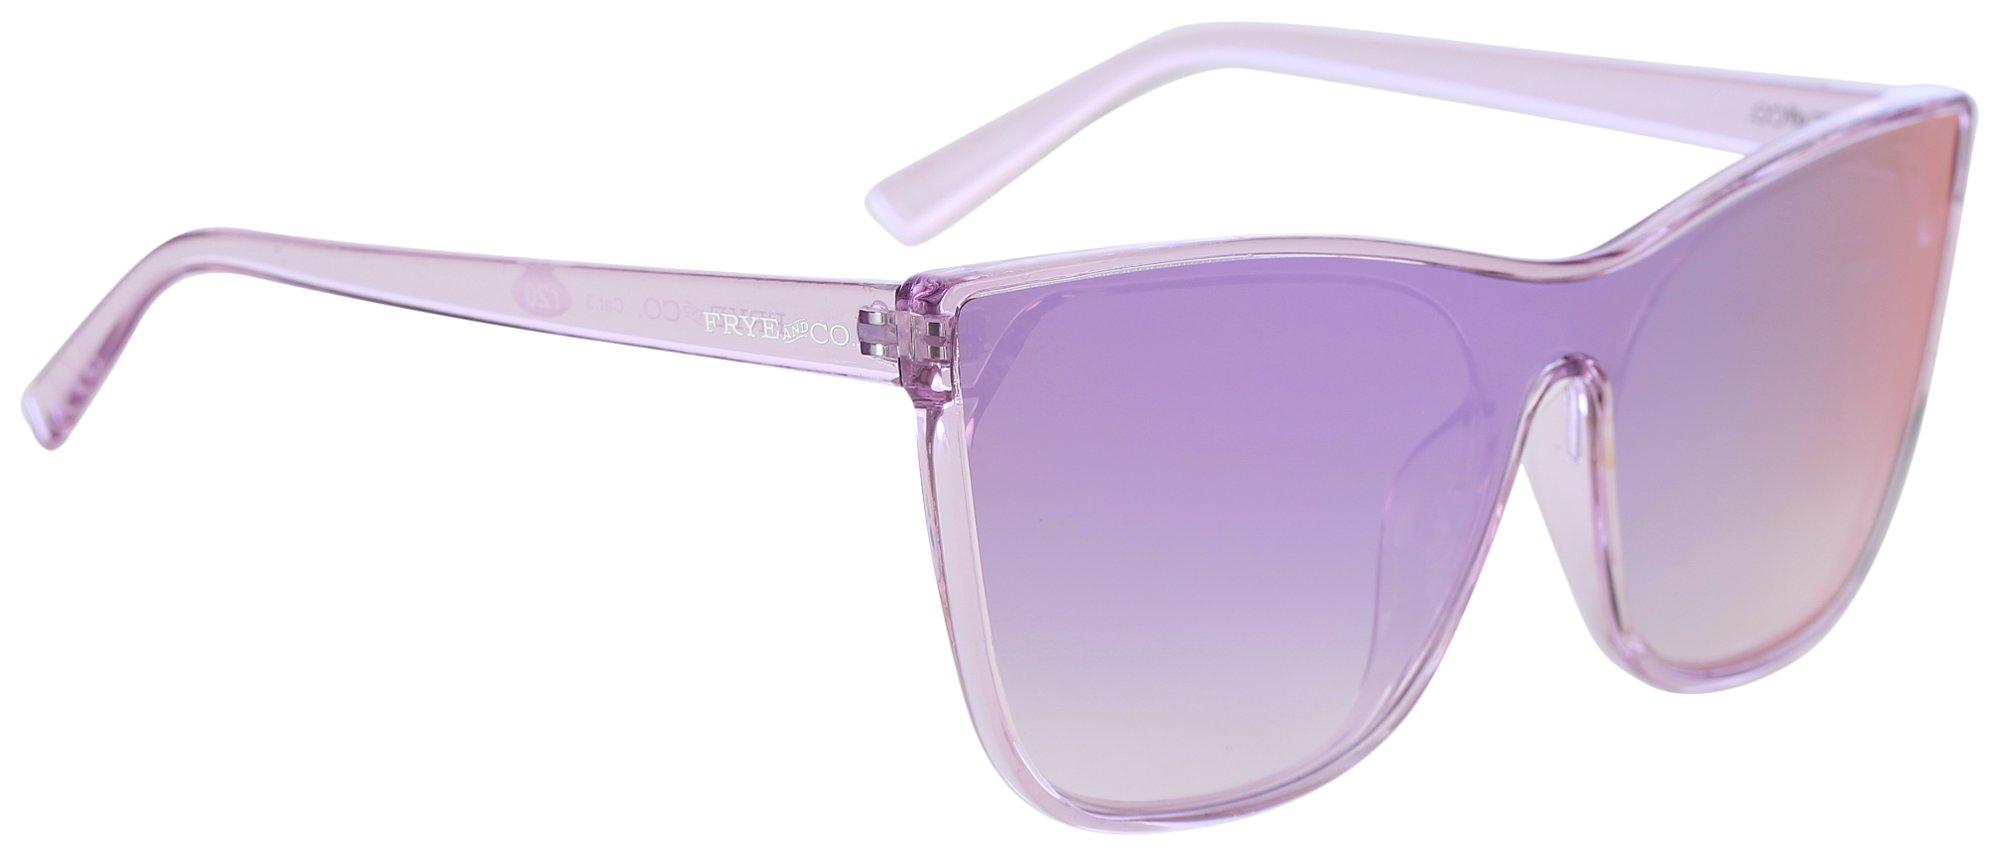 FRYE & CO Womens Reflective Translucent Frame Sunglasses